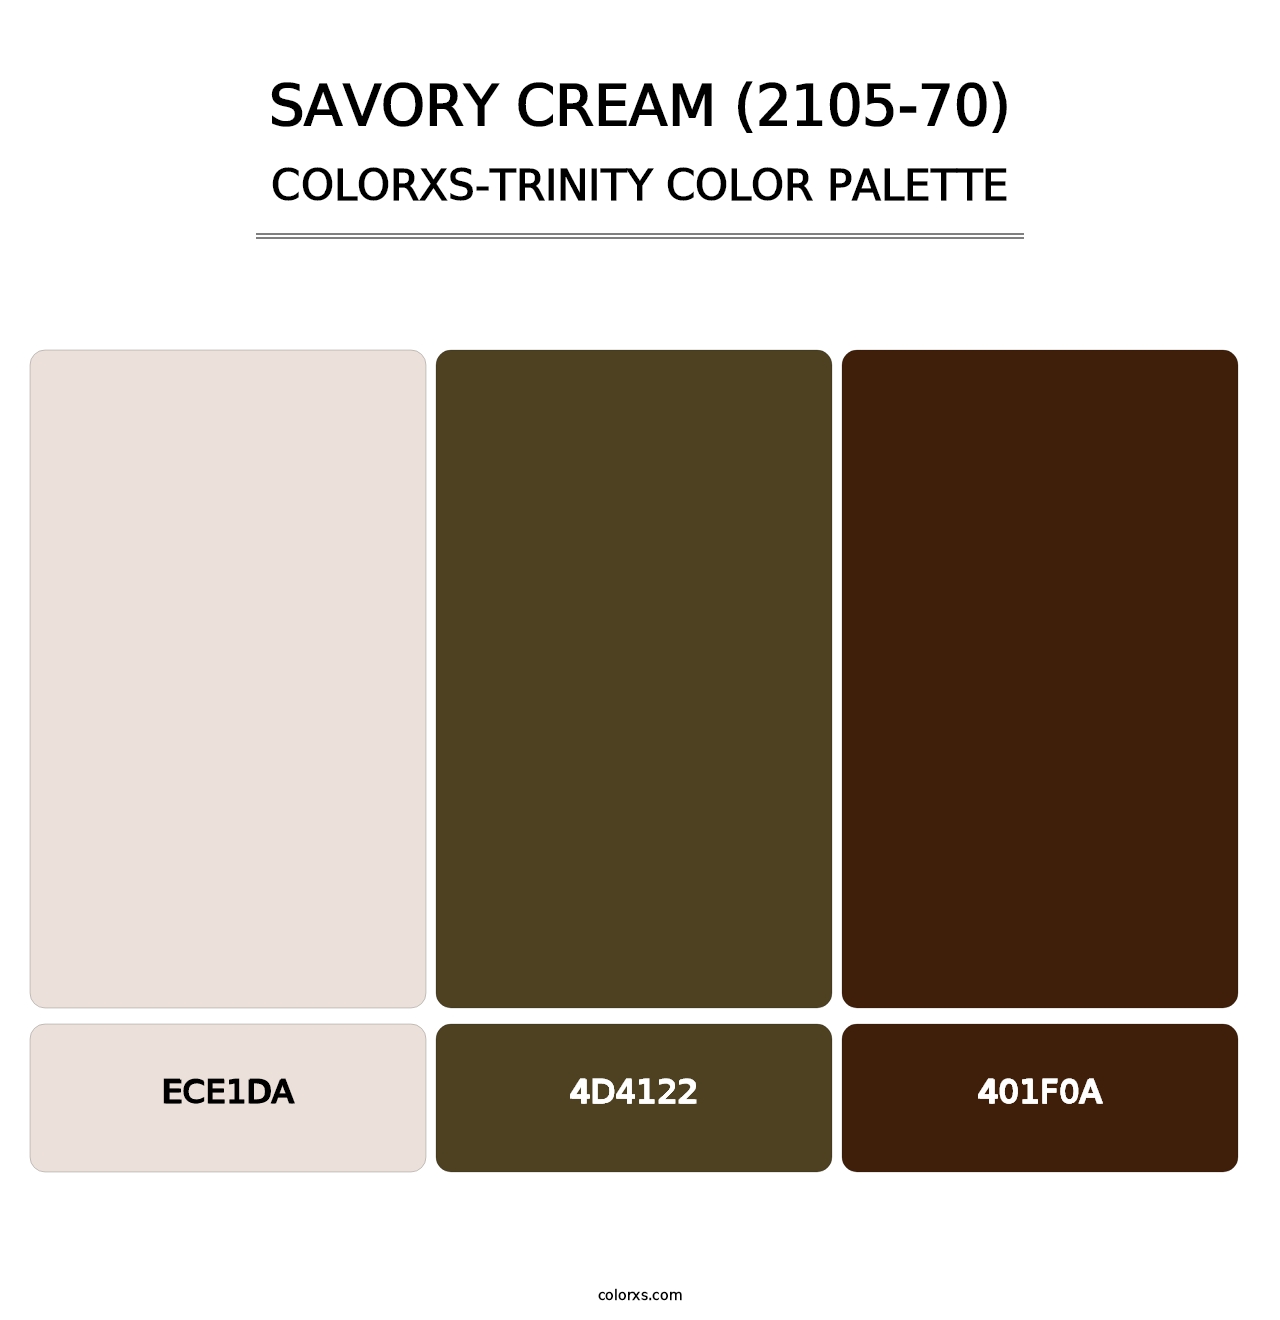 Savory Cream (2105-70) - Colorxs Trinity Palette